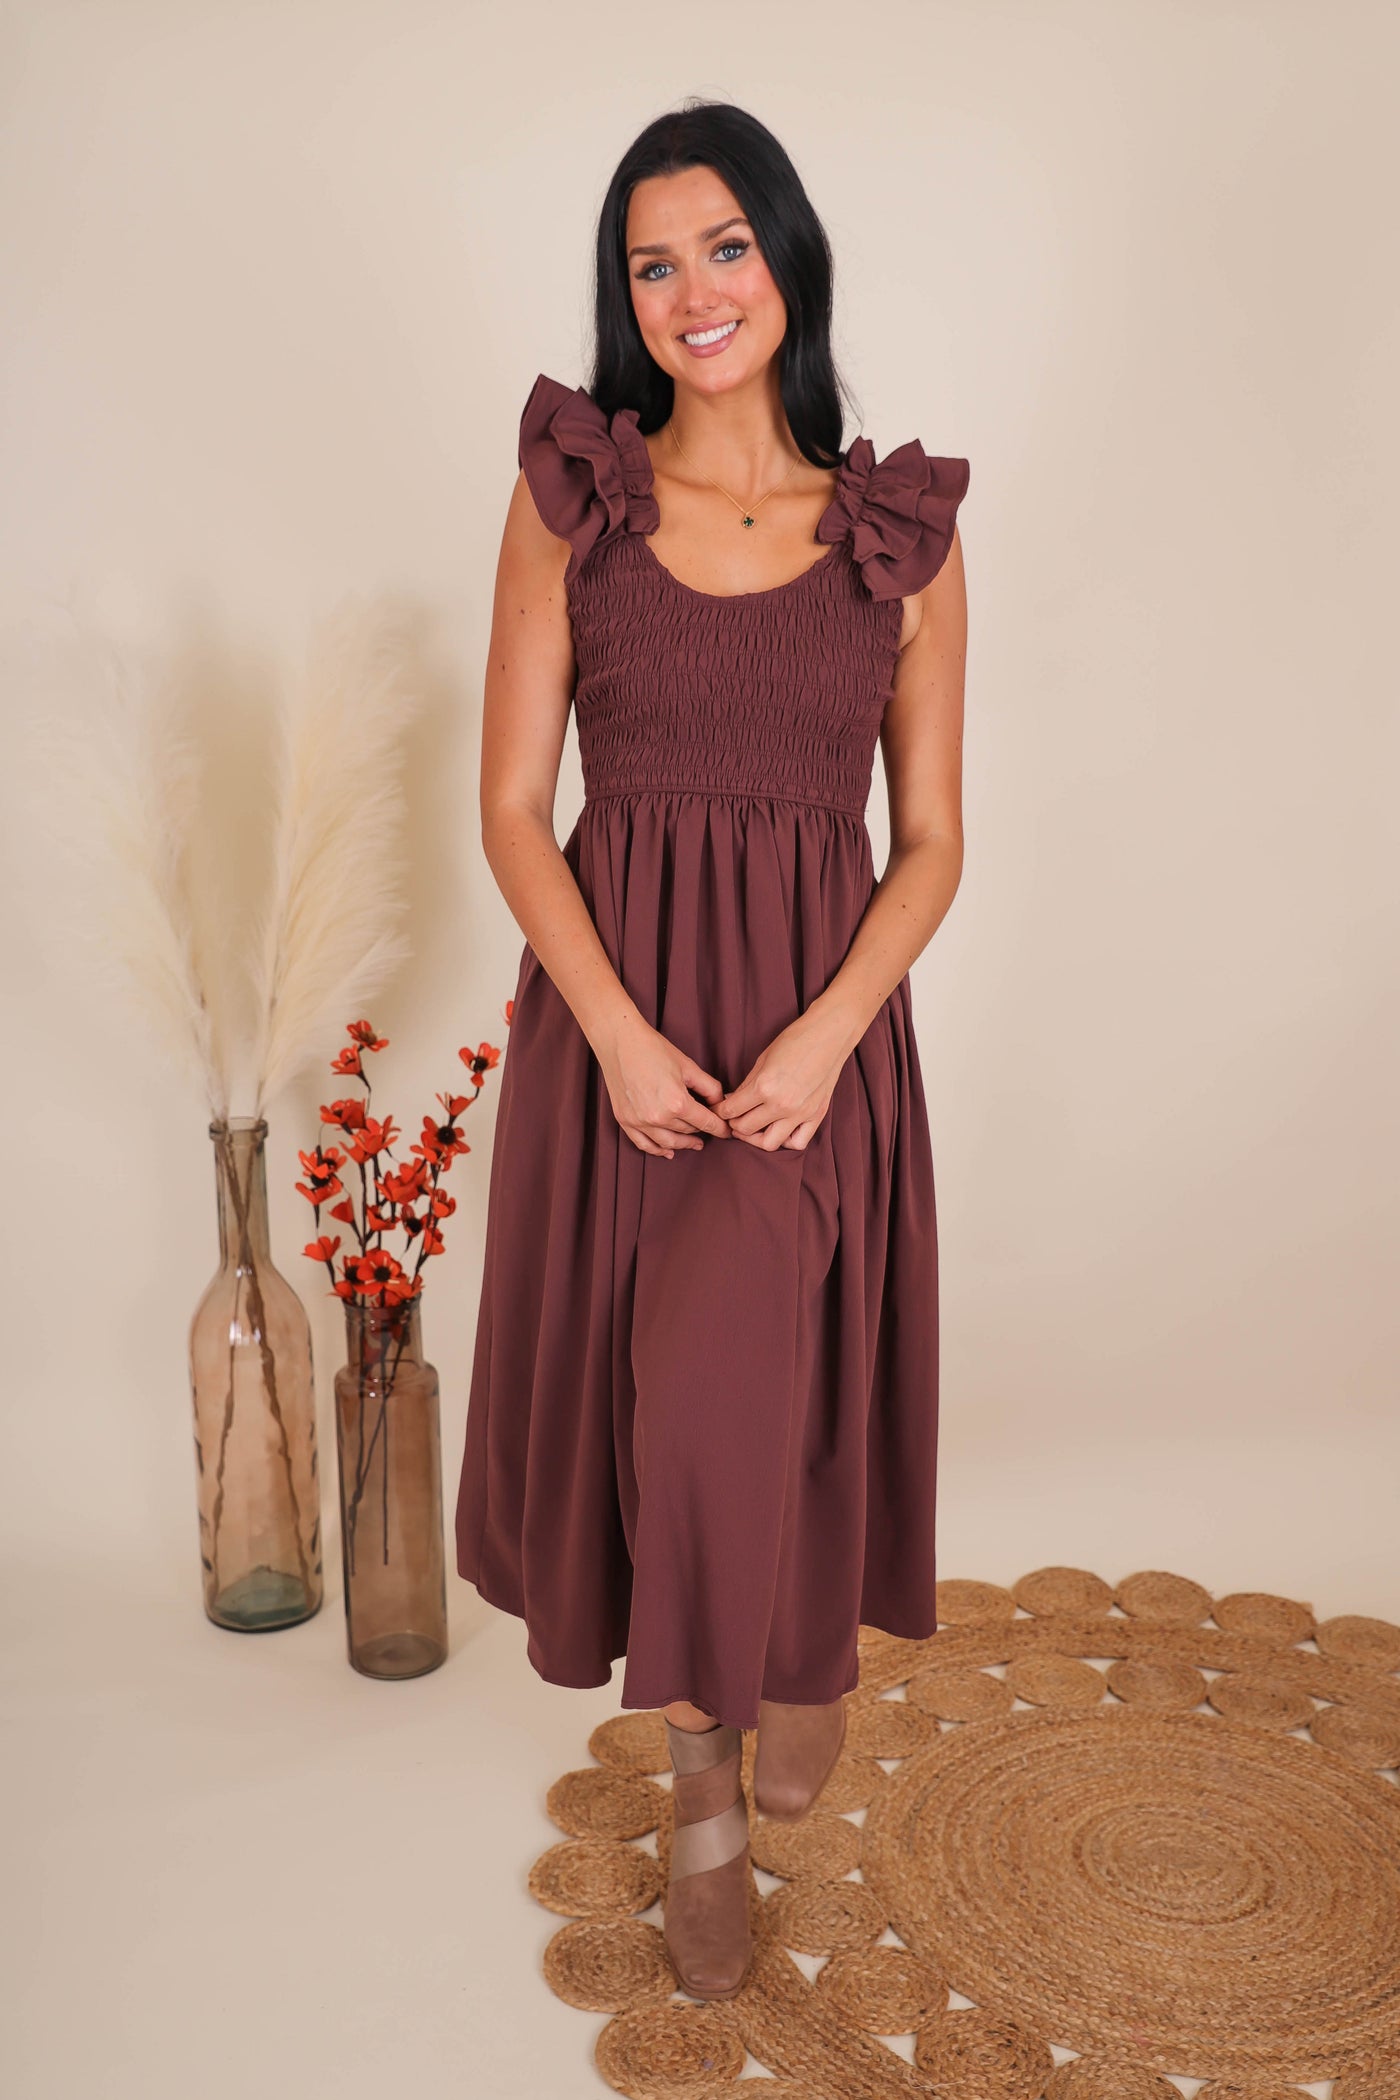 Ruffle Shoulder Smocked Dress- Women's Conservative Dresses- Entro Midi Dresses